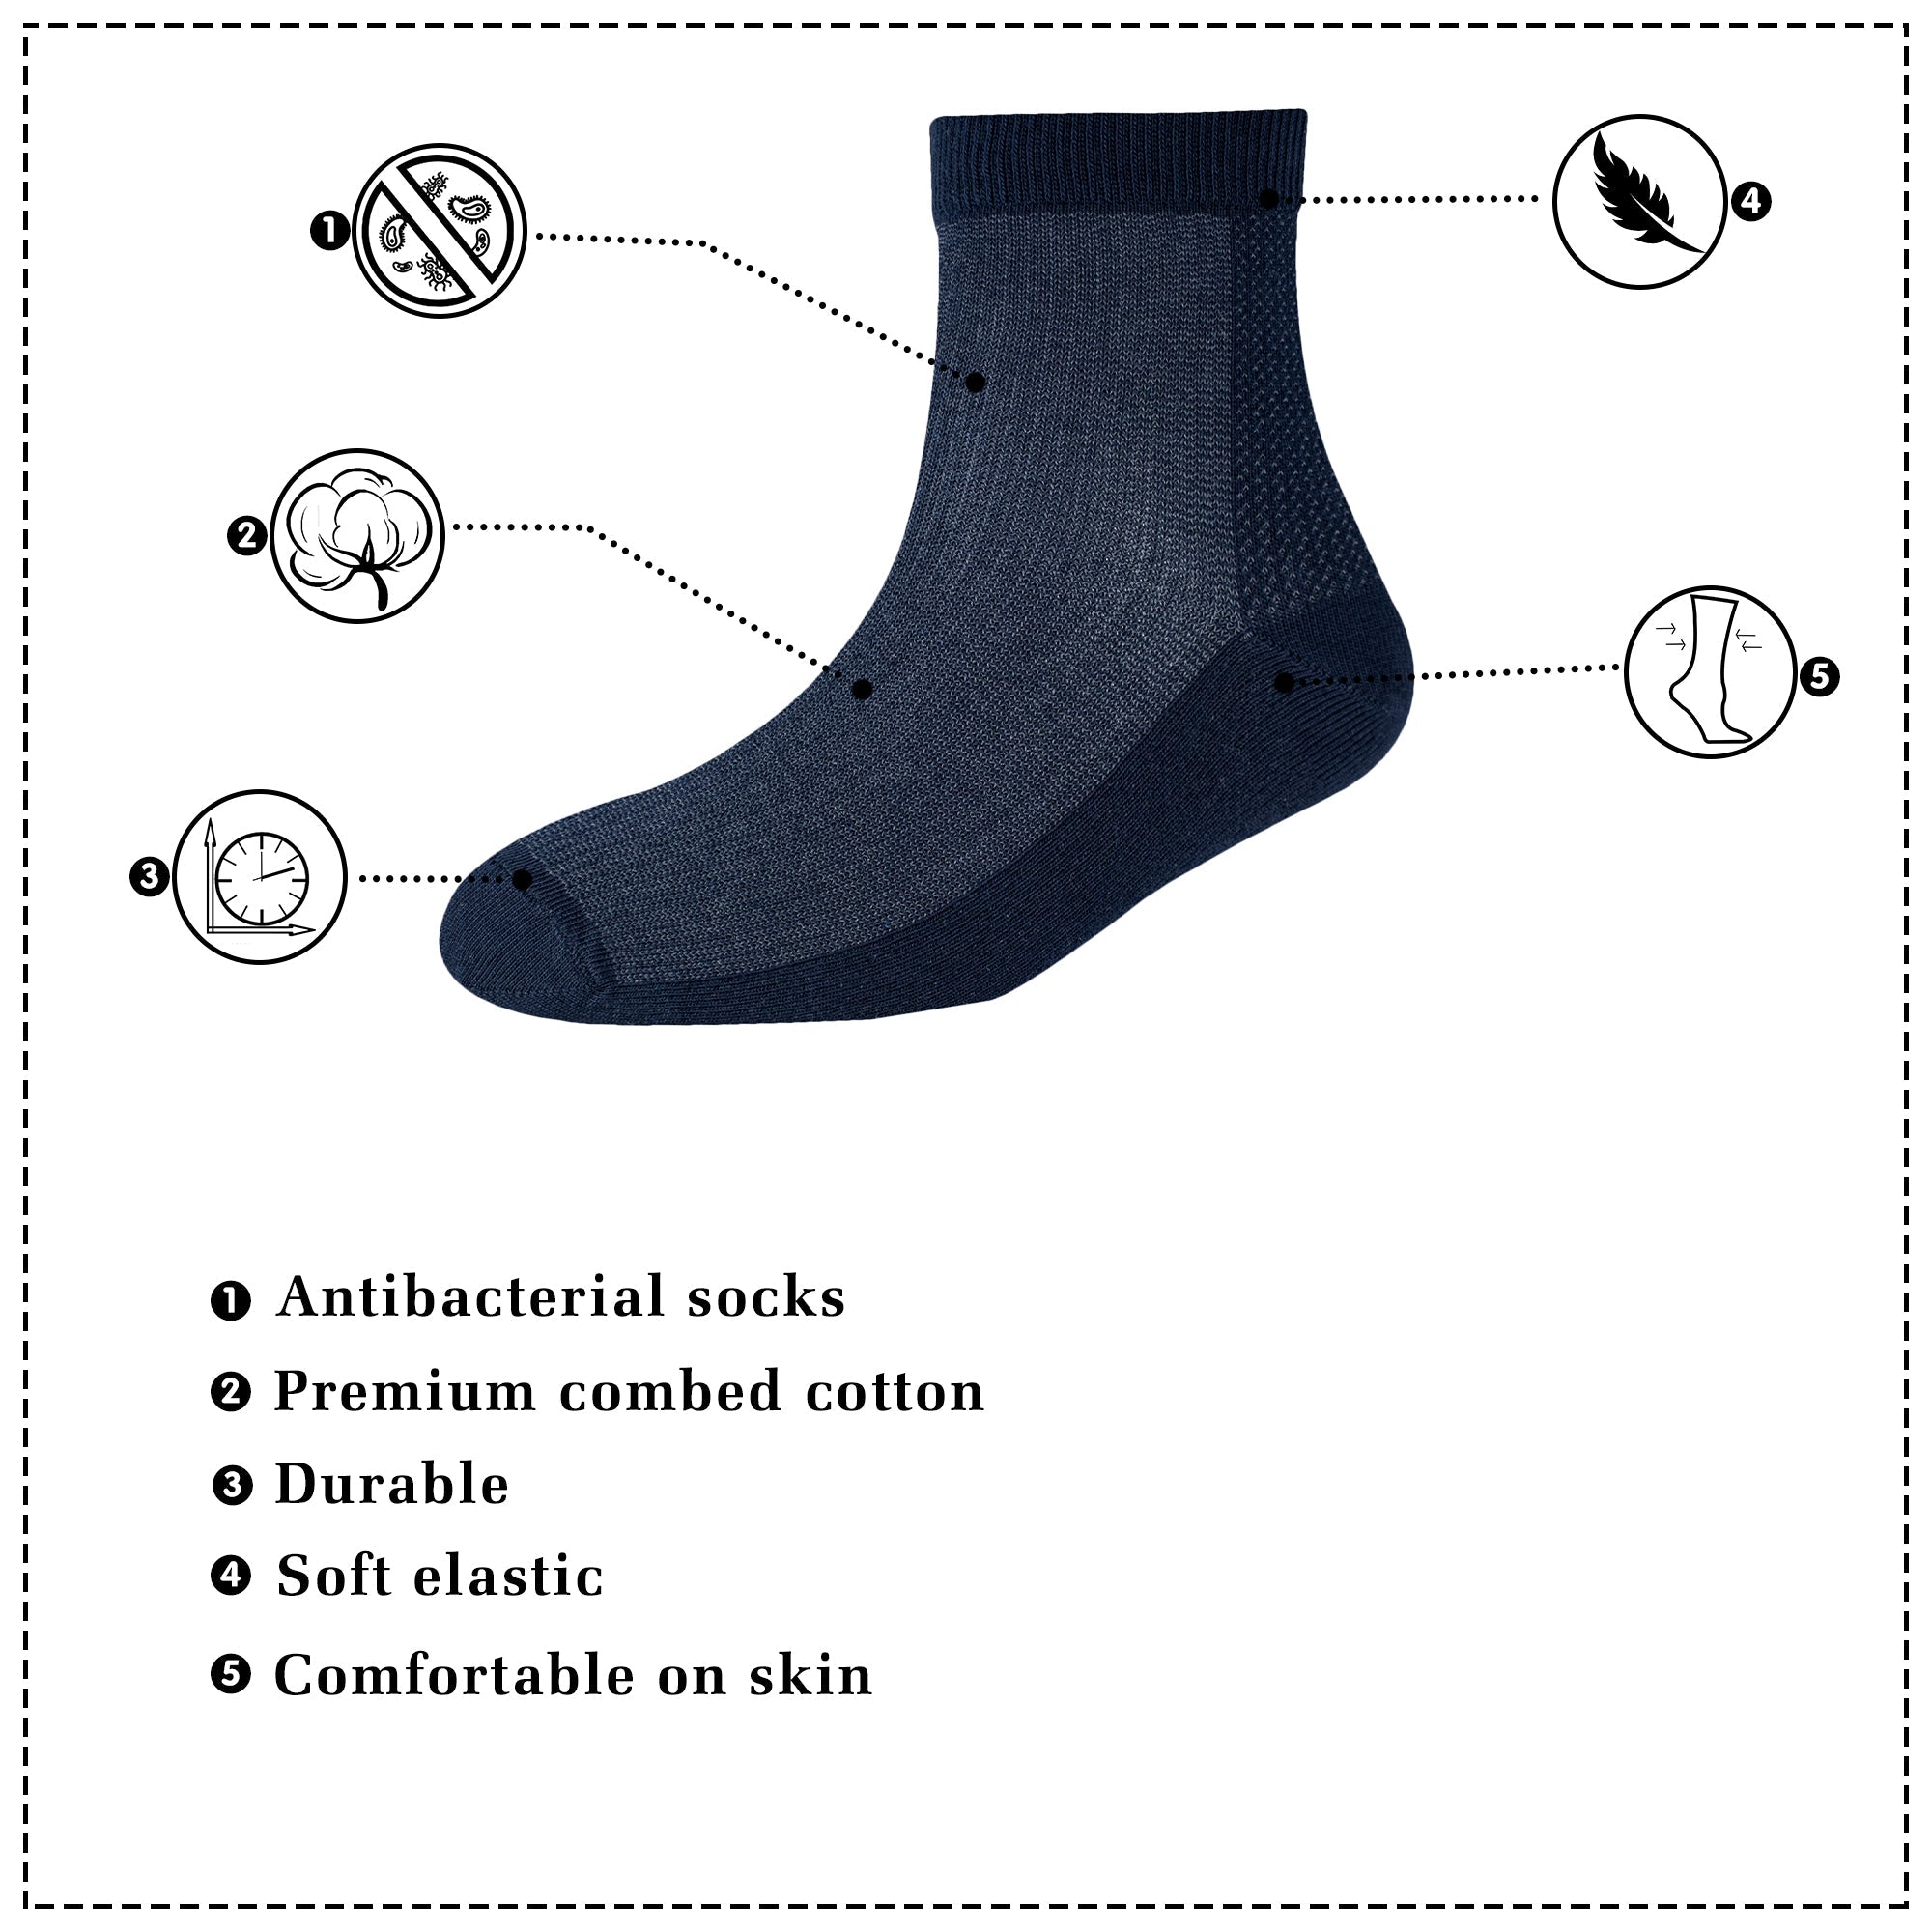 Buy Versatile Comfort: Men's AL048 Ankle Socks, Pack of 3